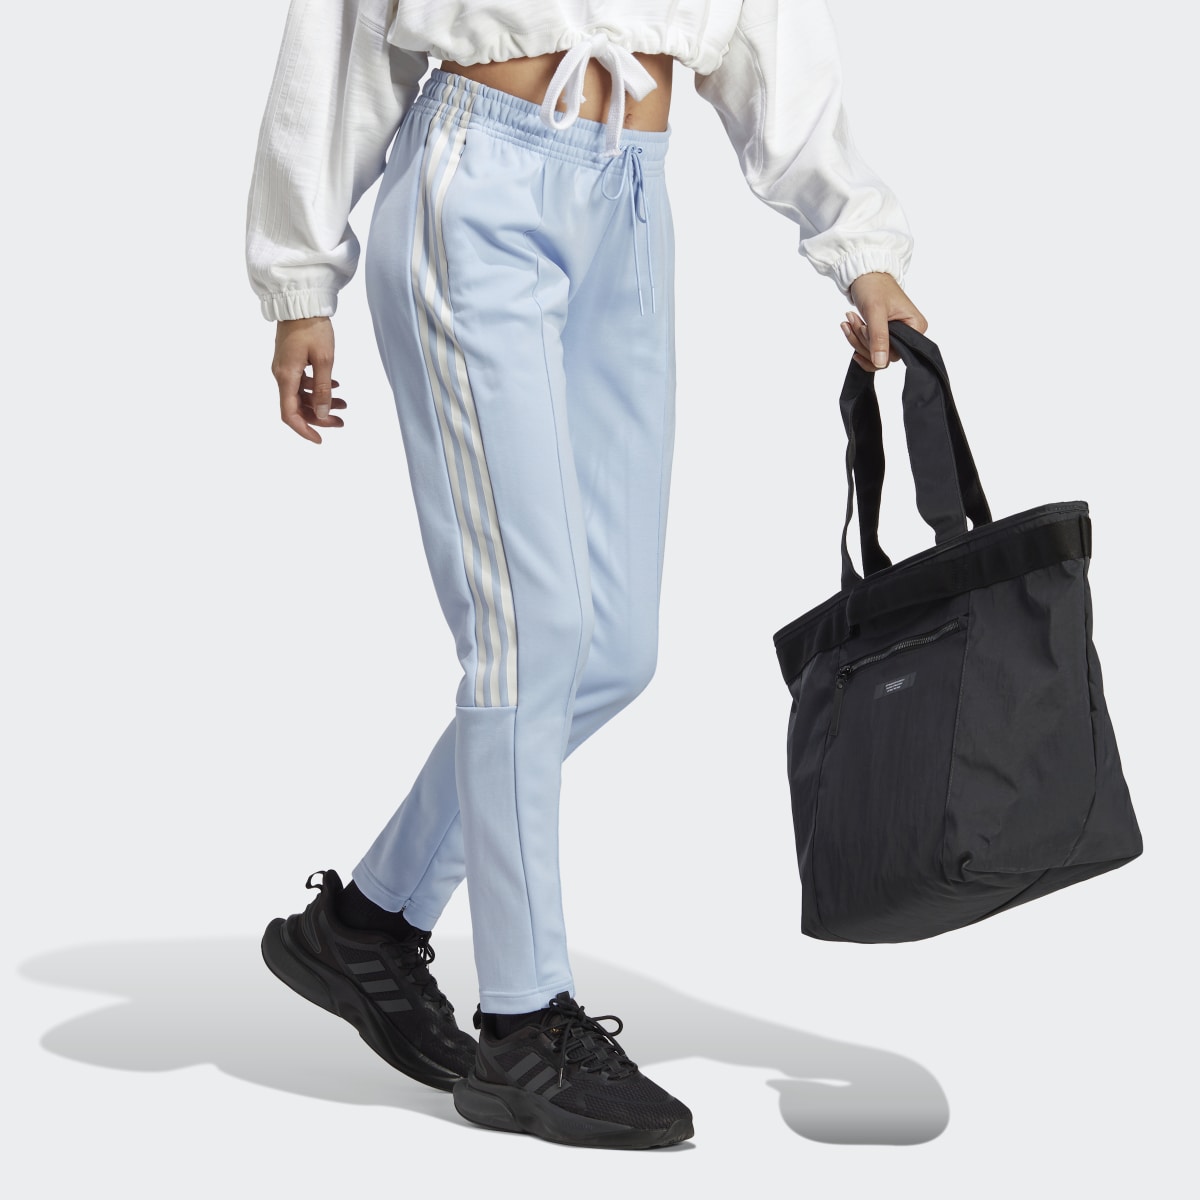 Adidas Tiro Suit Up Lifestyle Track Pants. 4